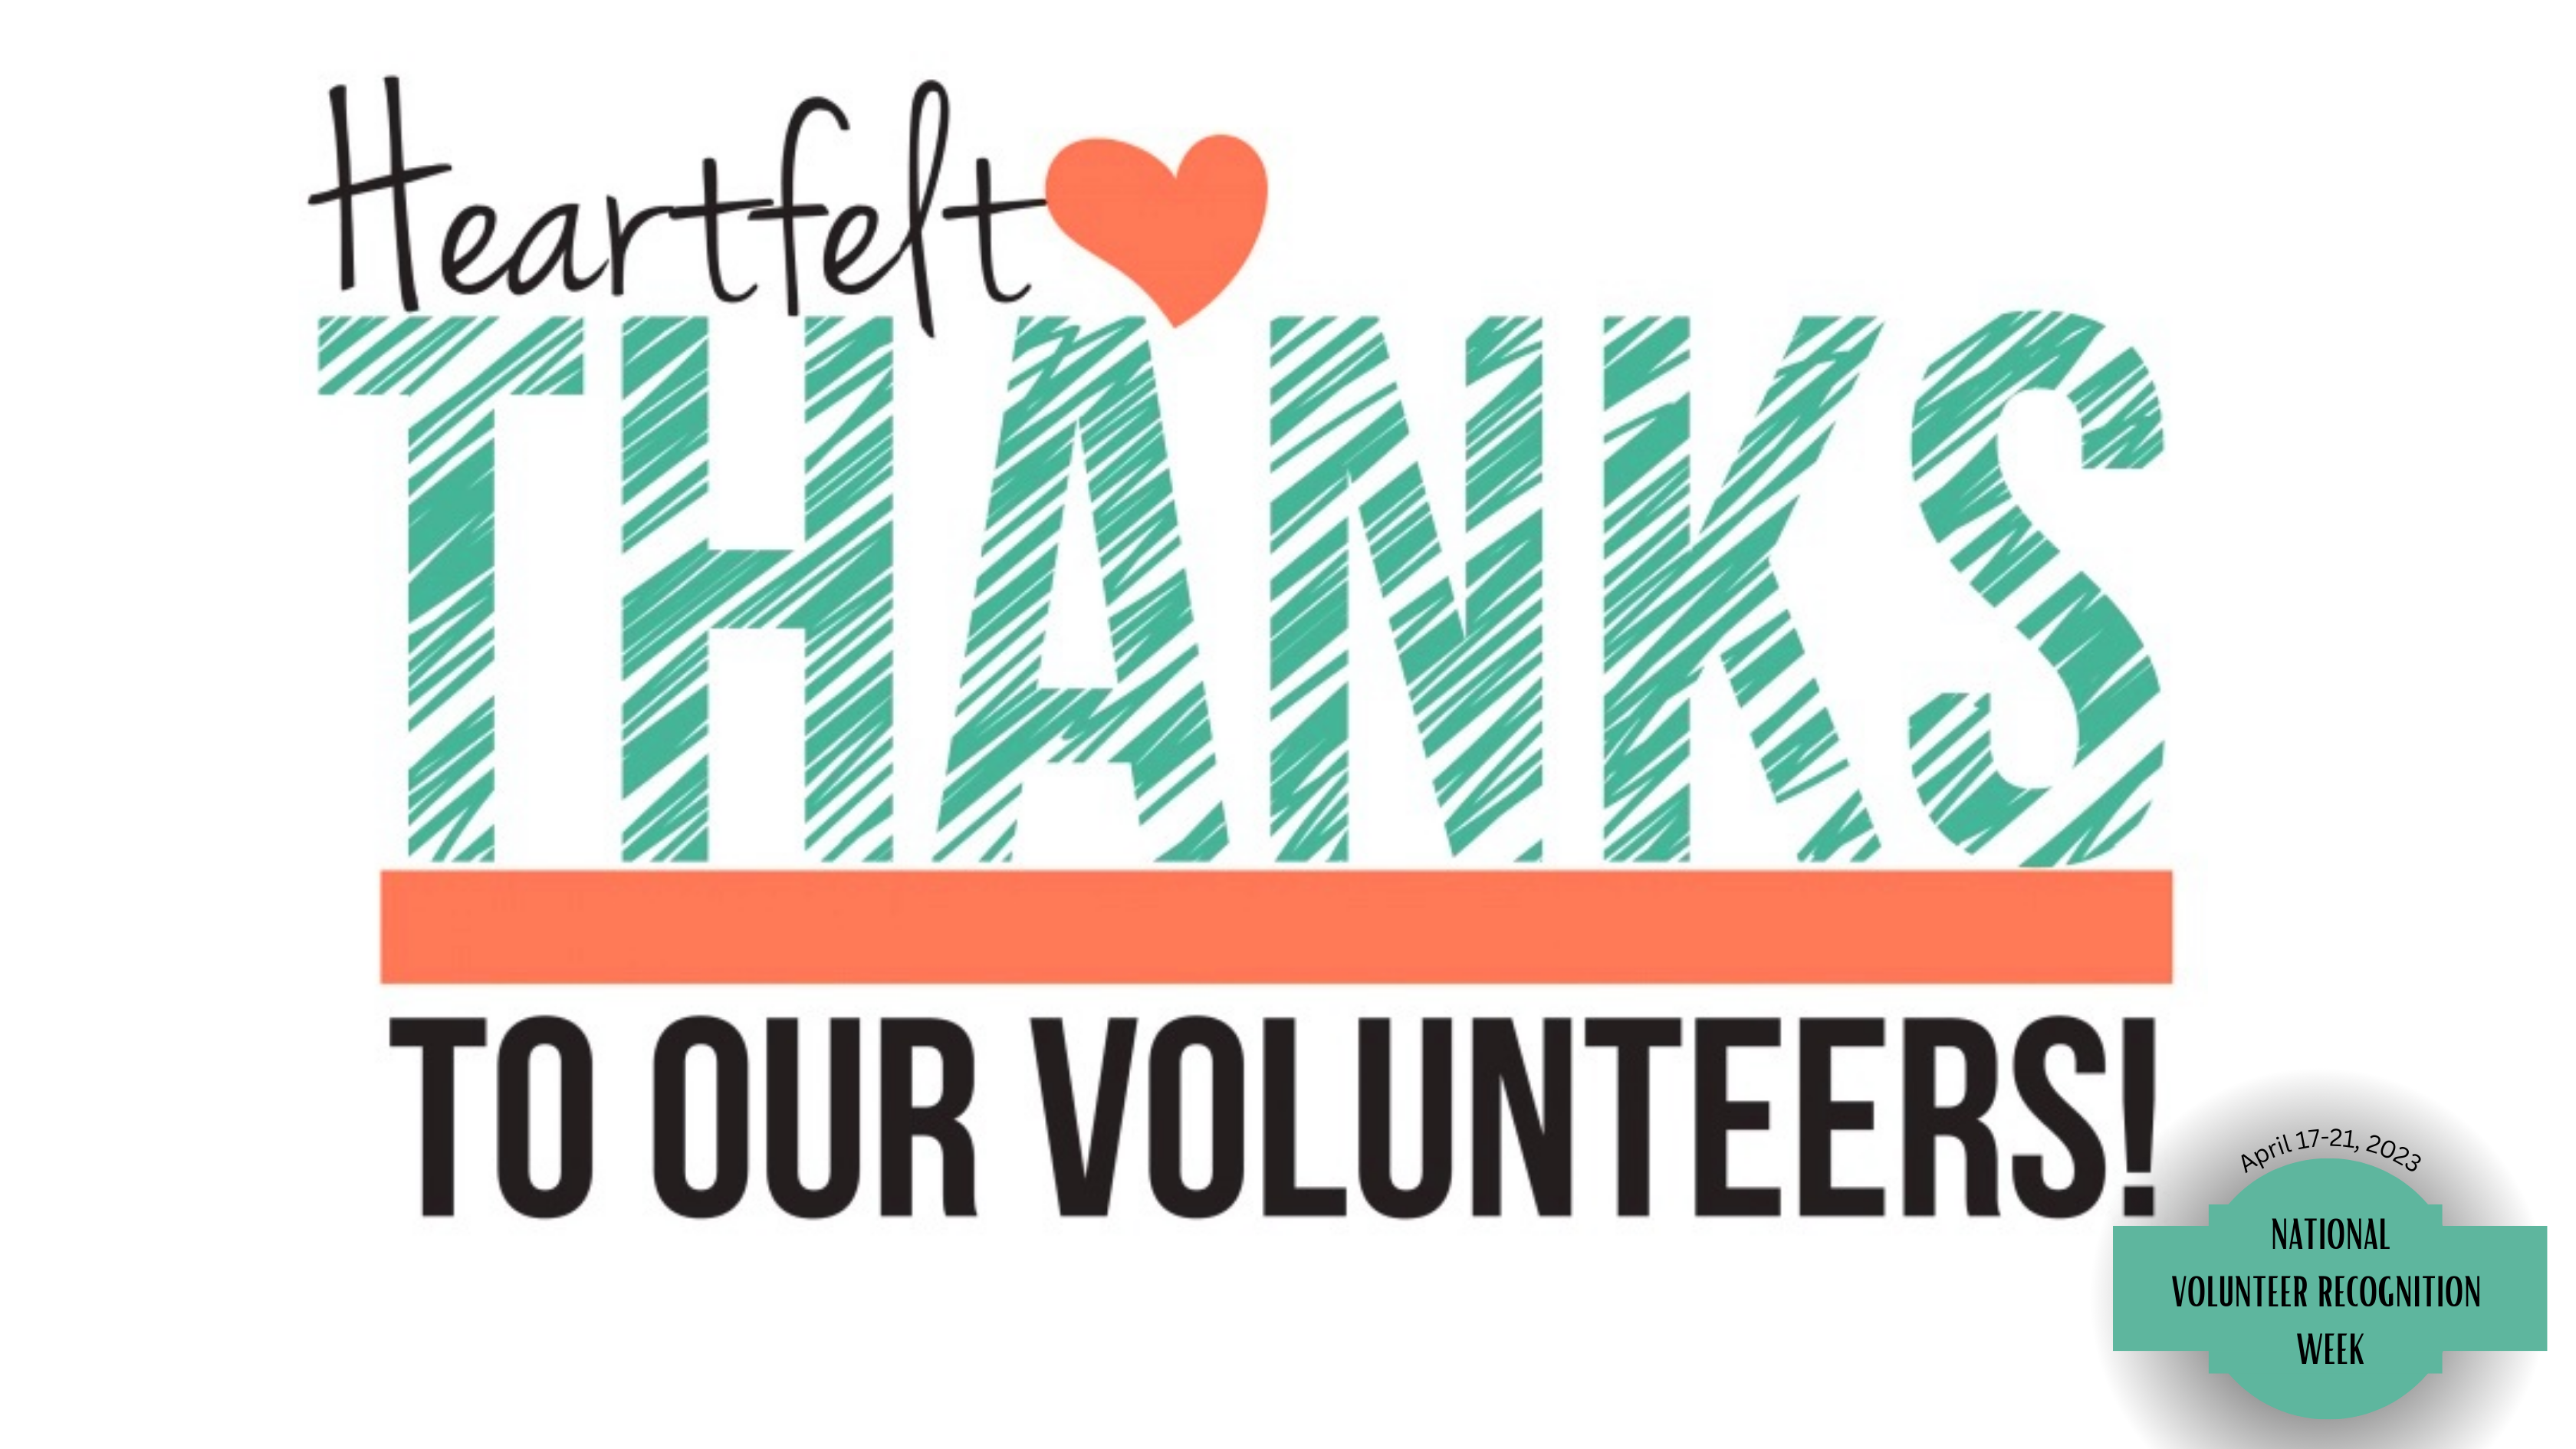 Heartfelt thanks to our volunteers